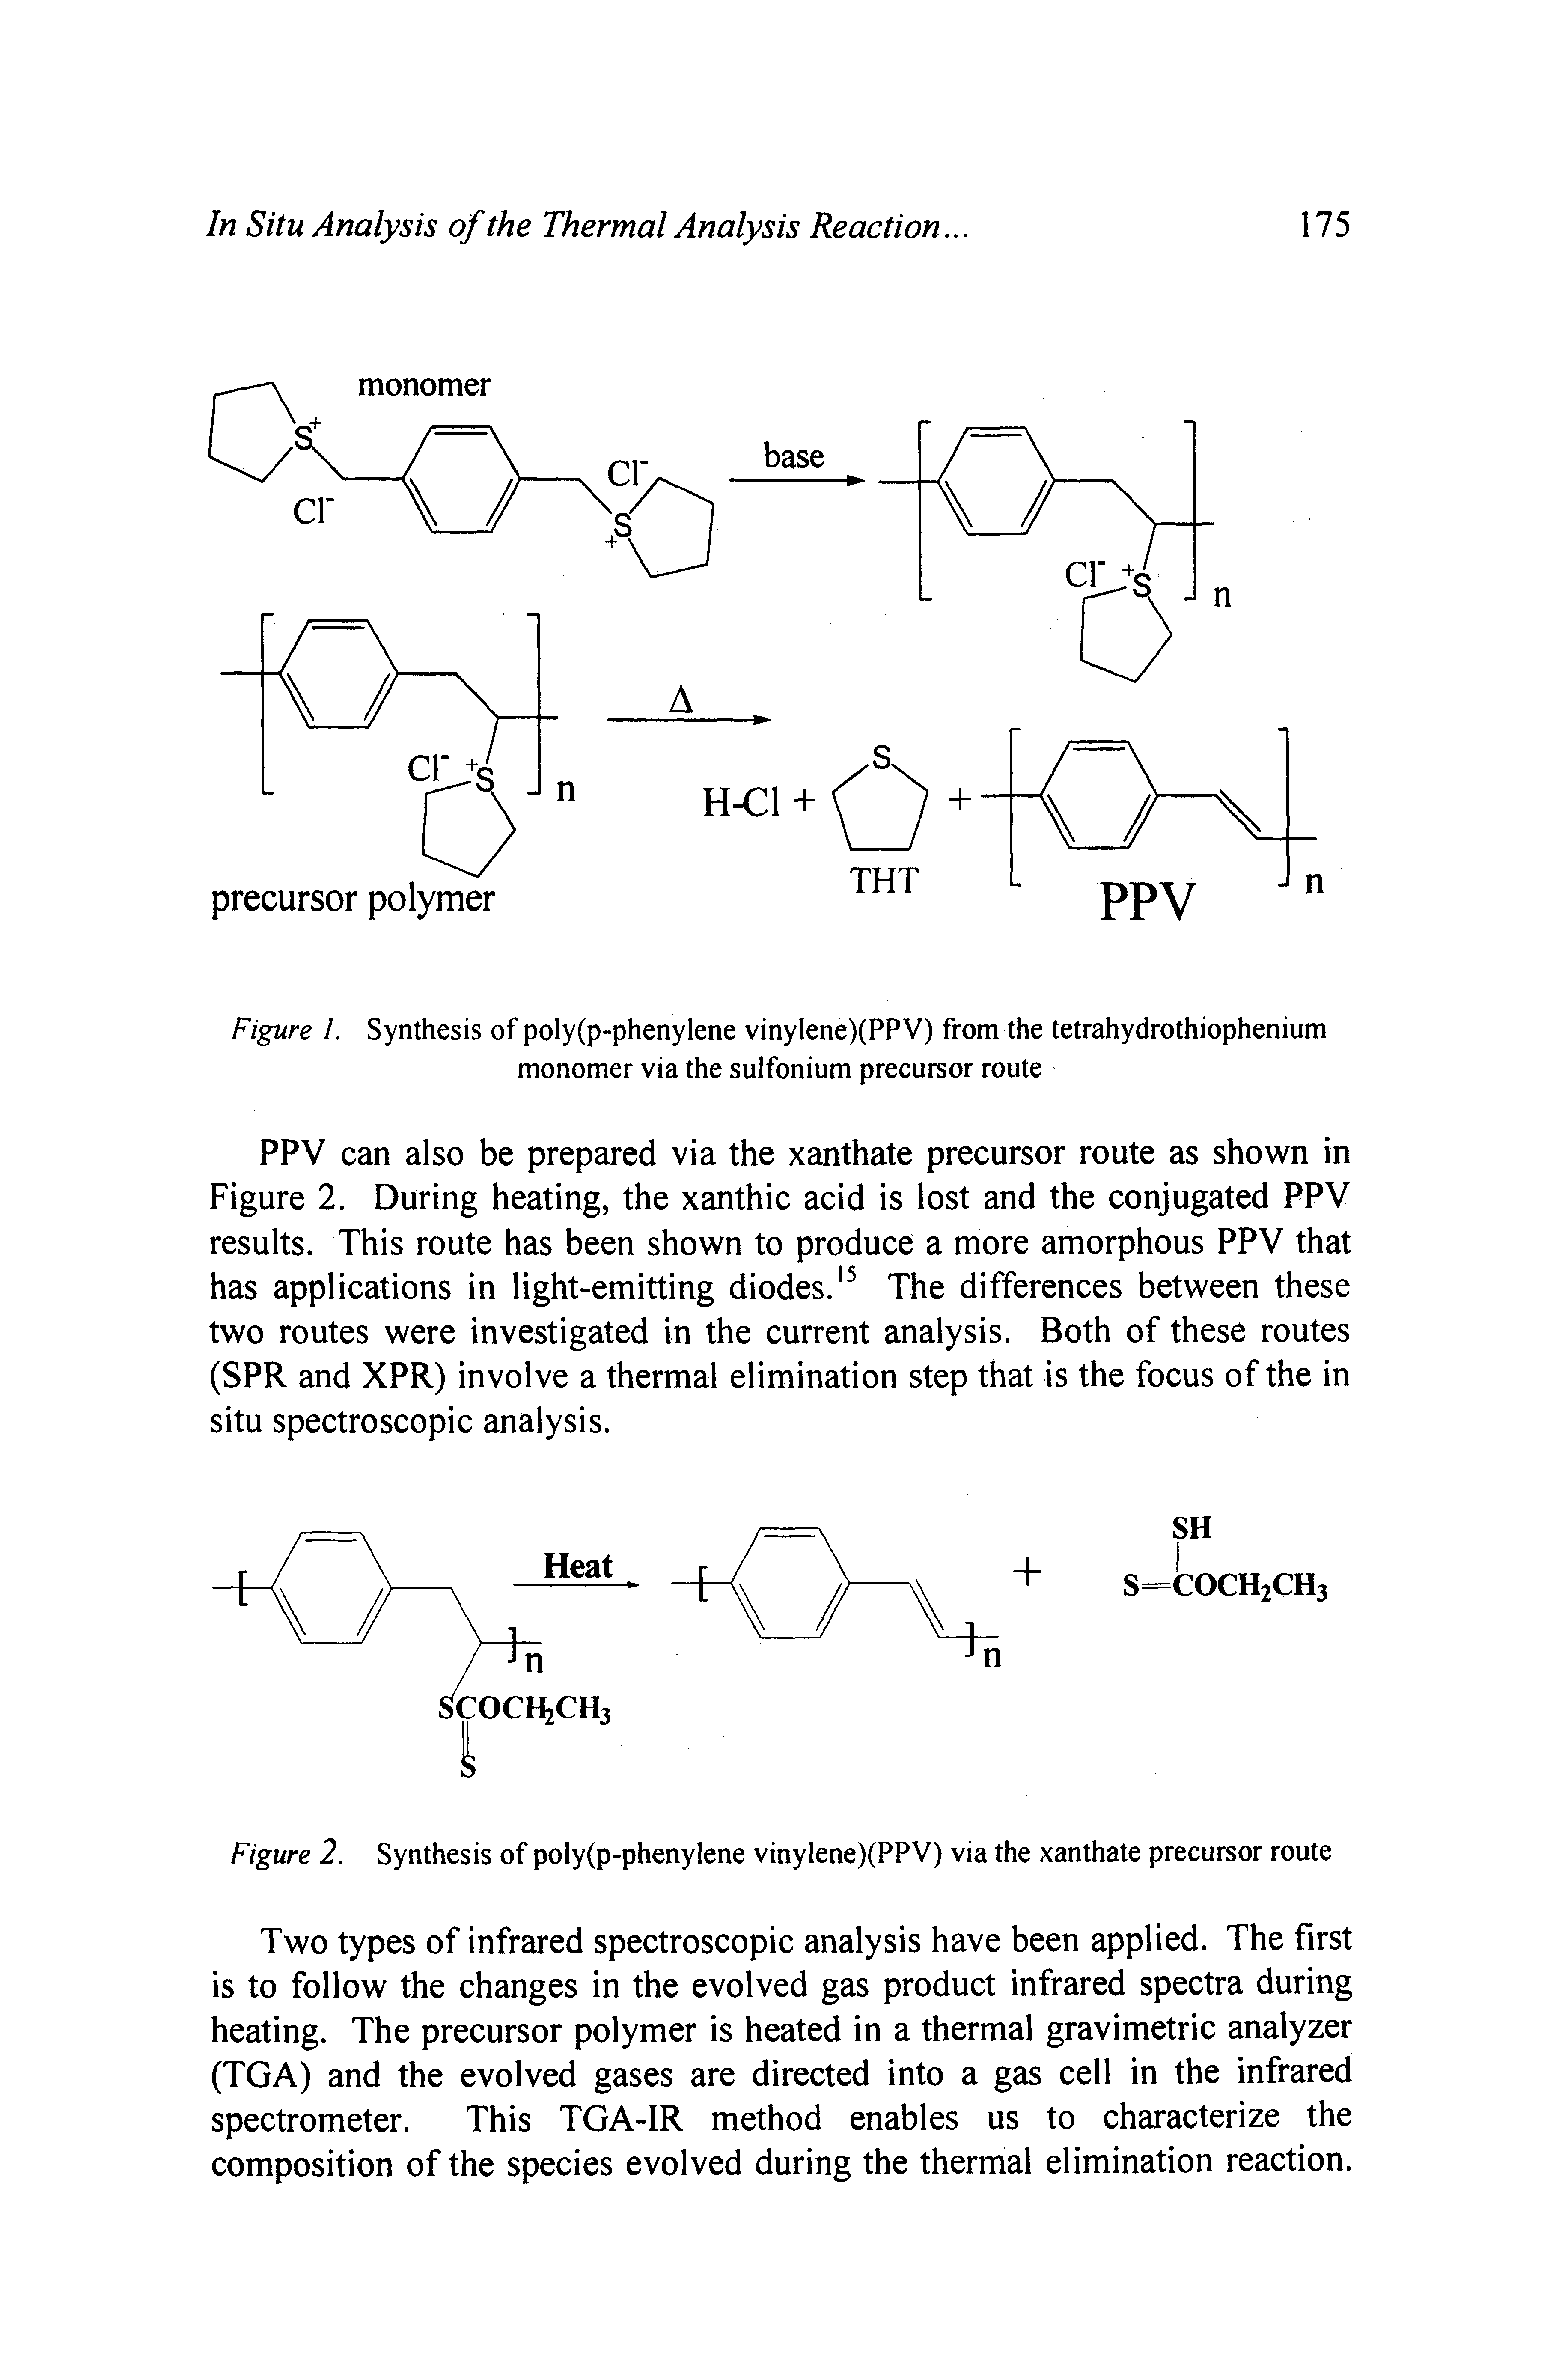 Figure 1. Synthesis of poly(p-phenylene vinylene)(PPV) from the tetrahydrothiophenium monomer via the sulfonium precursor route...